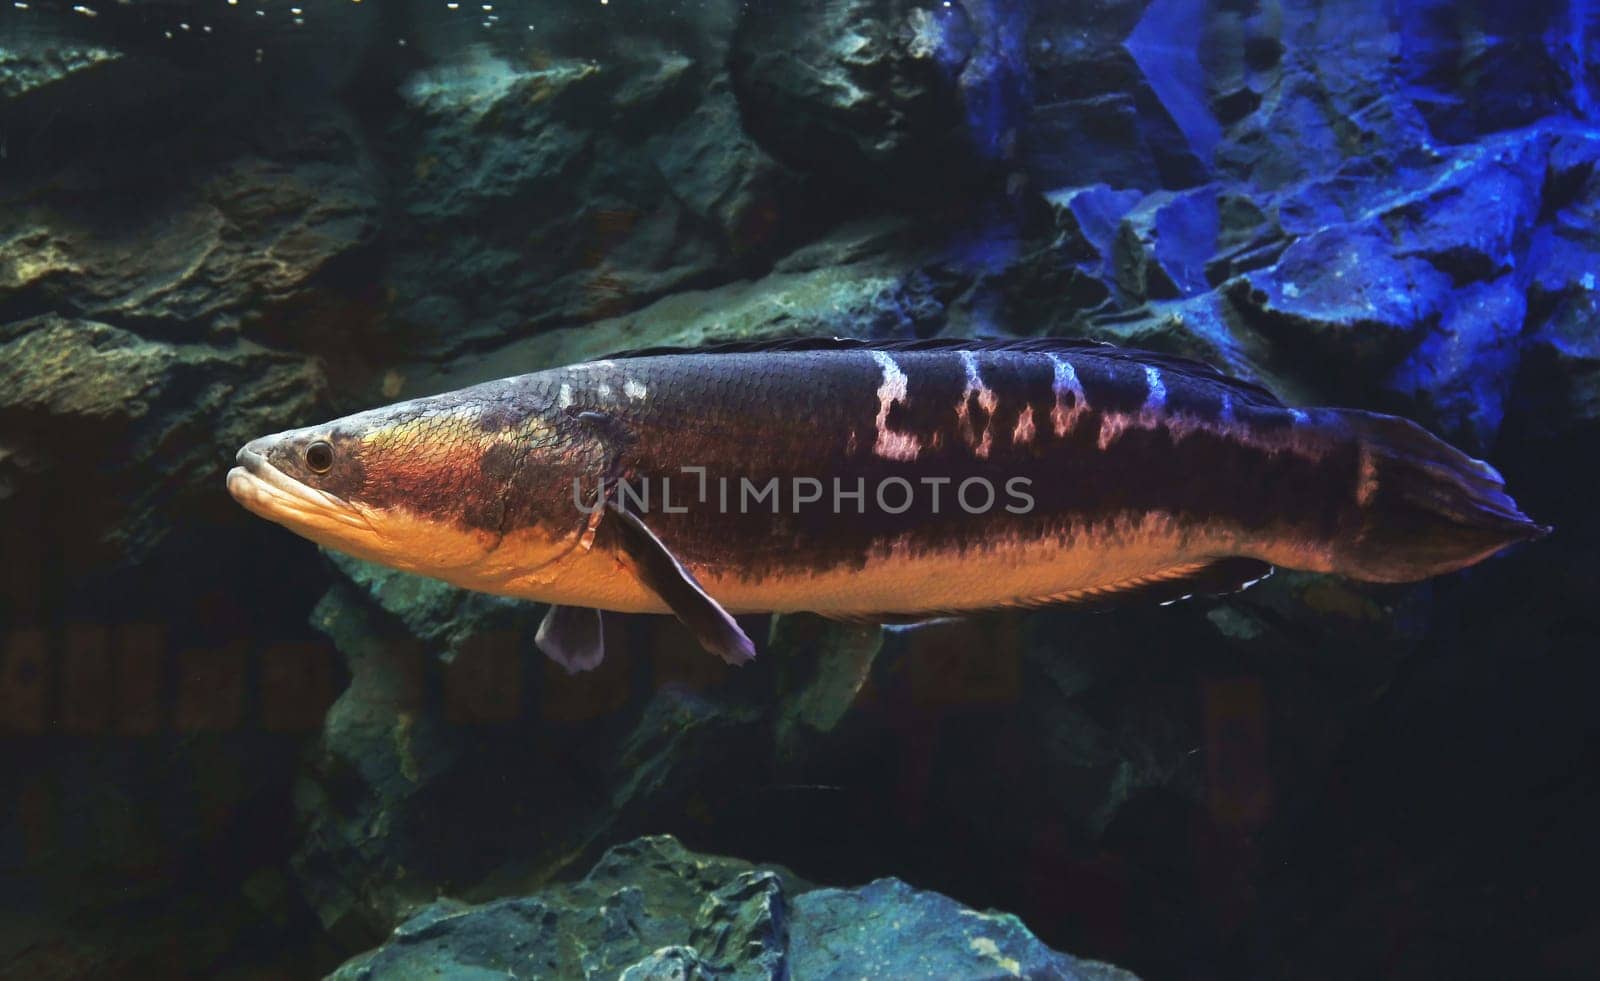 Giant snake head fish in aquarium tank  by stoonn